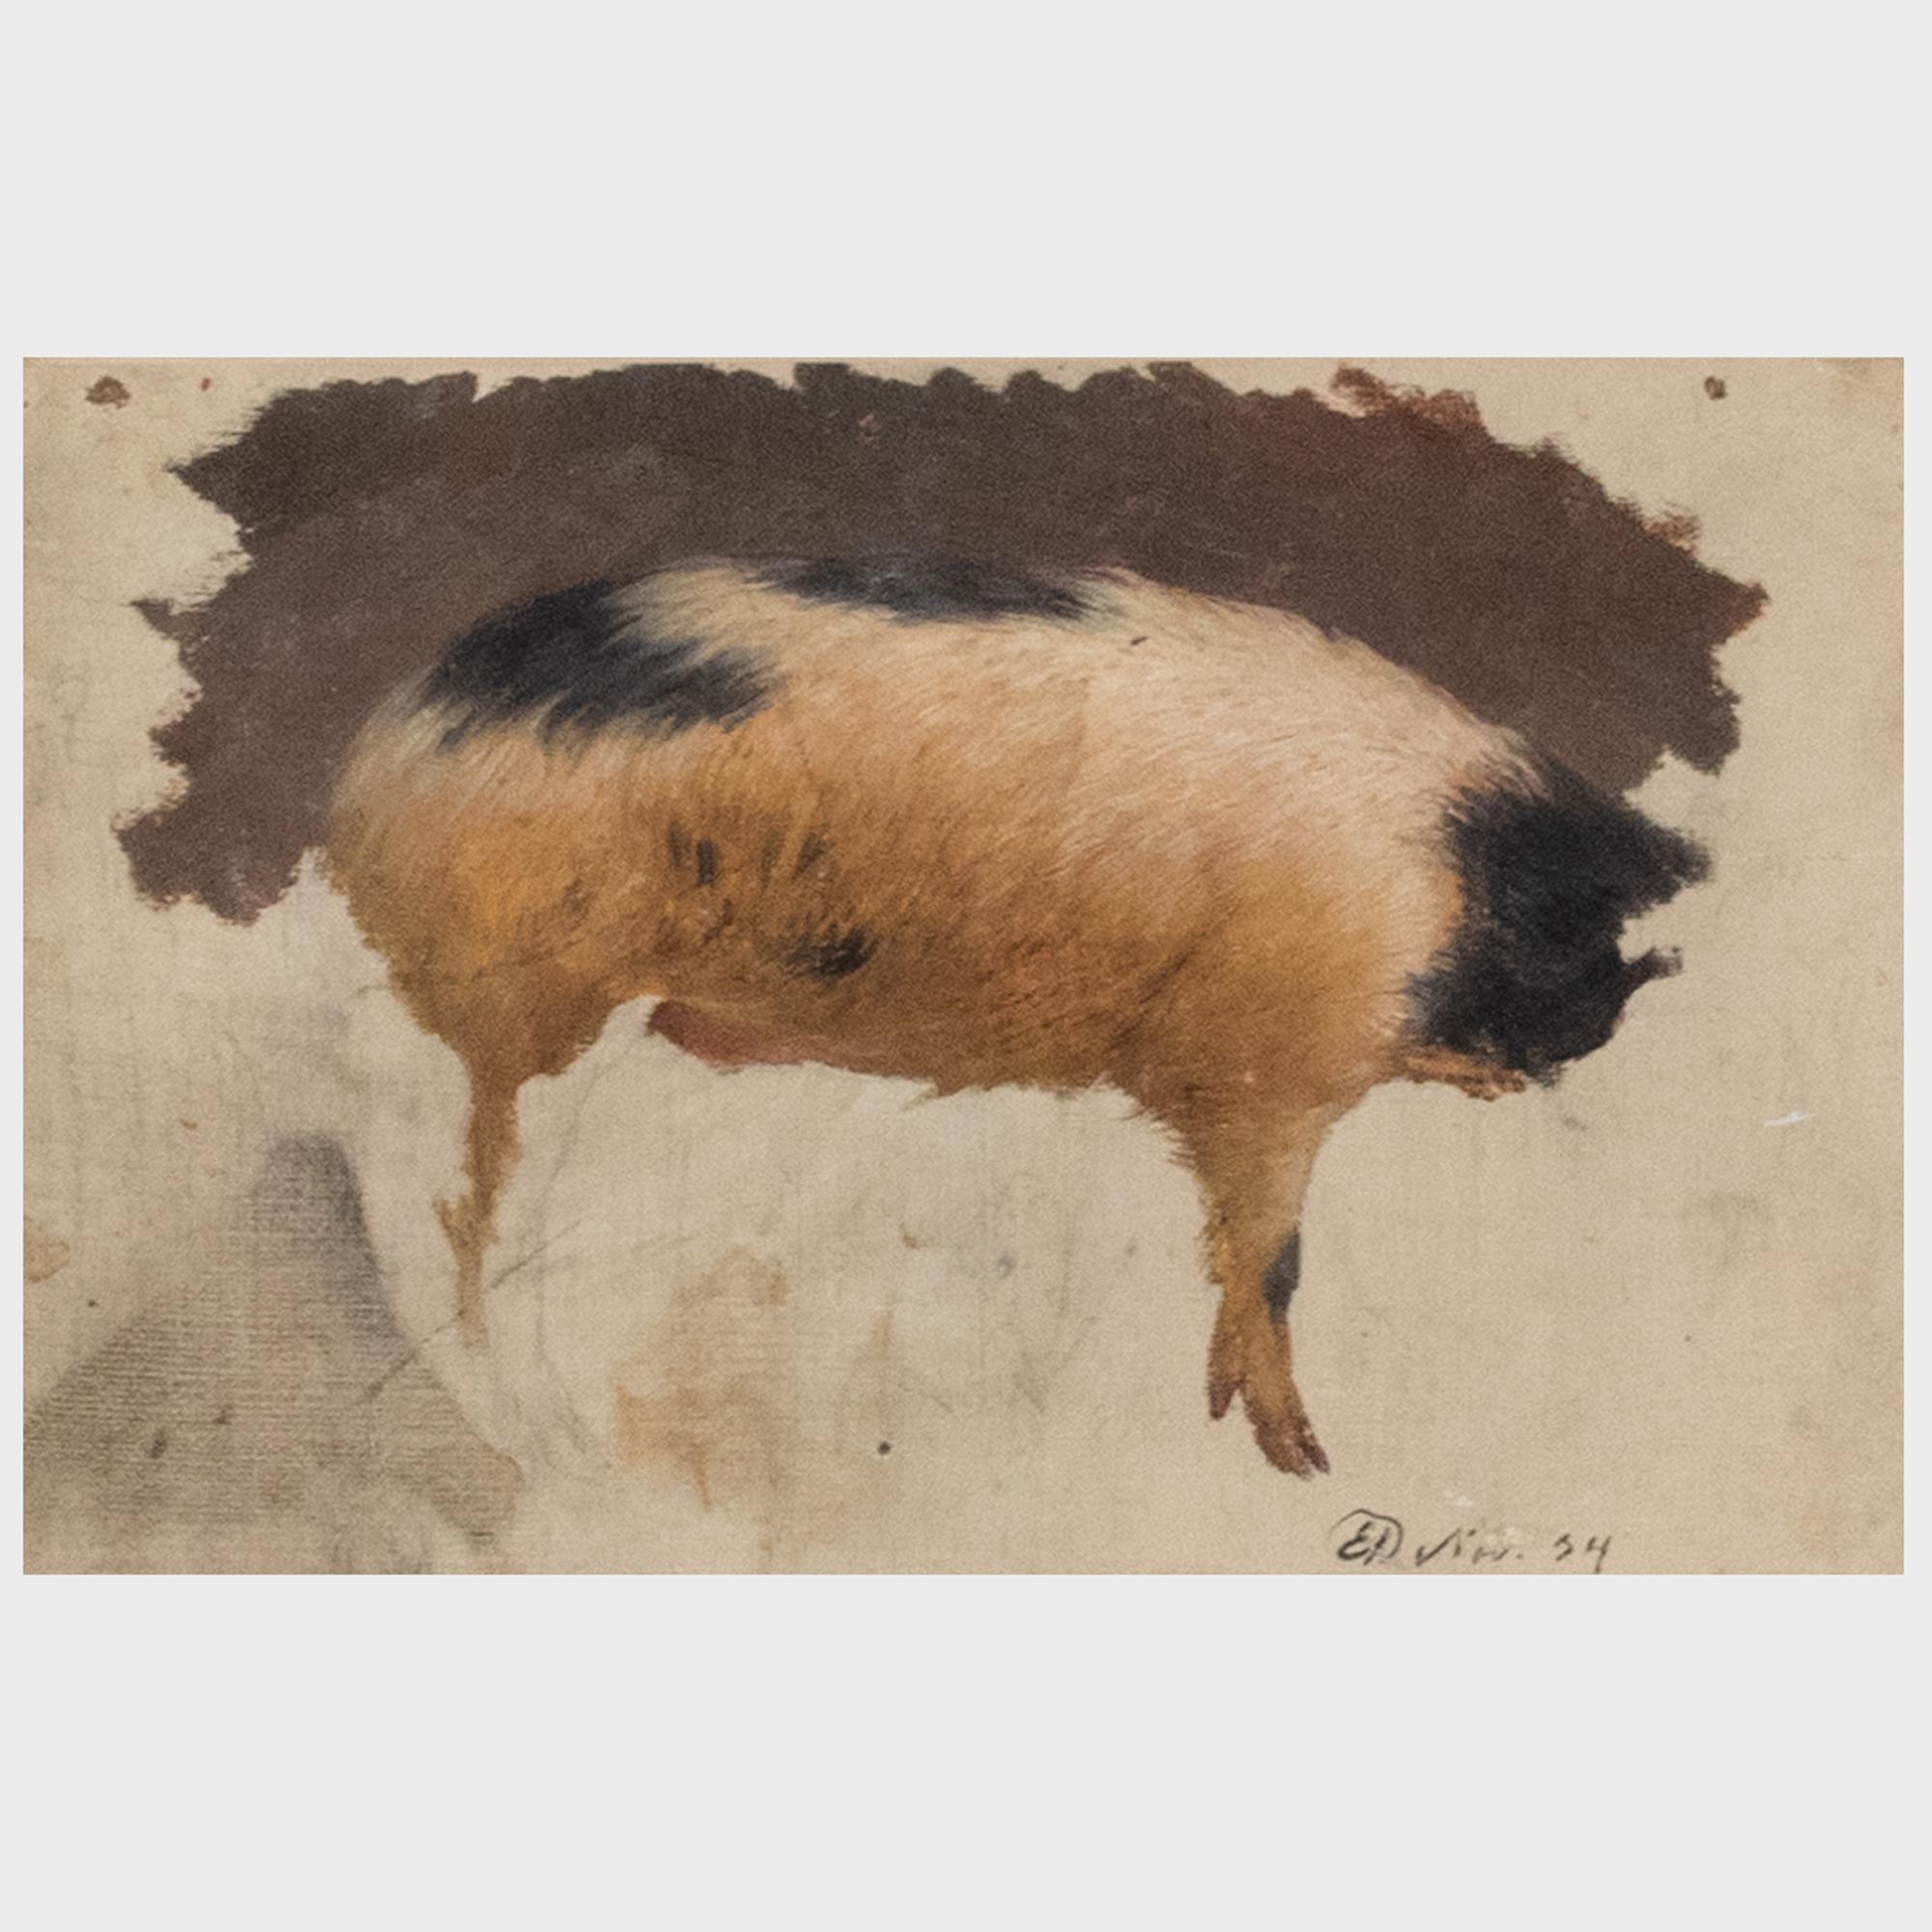 harris on the pig 1881